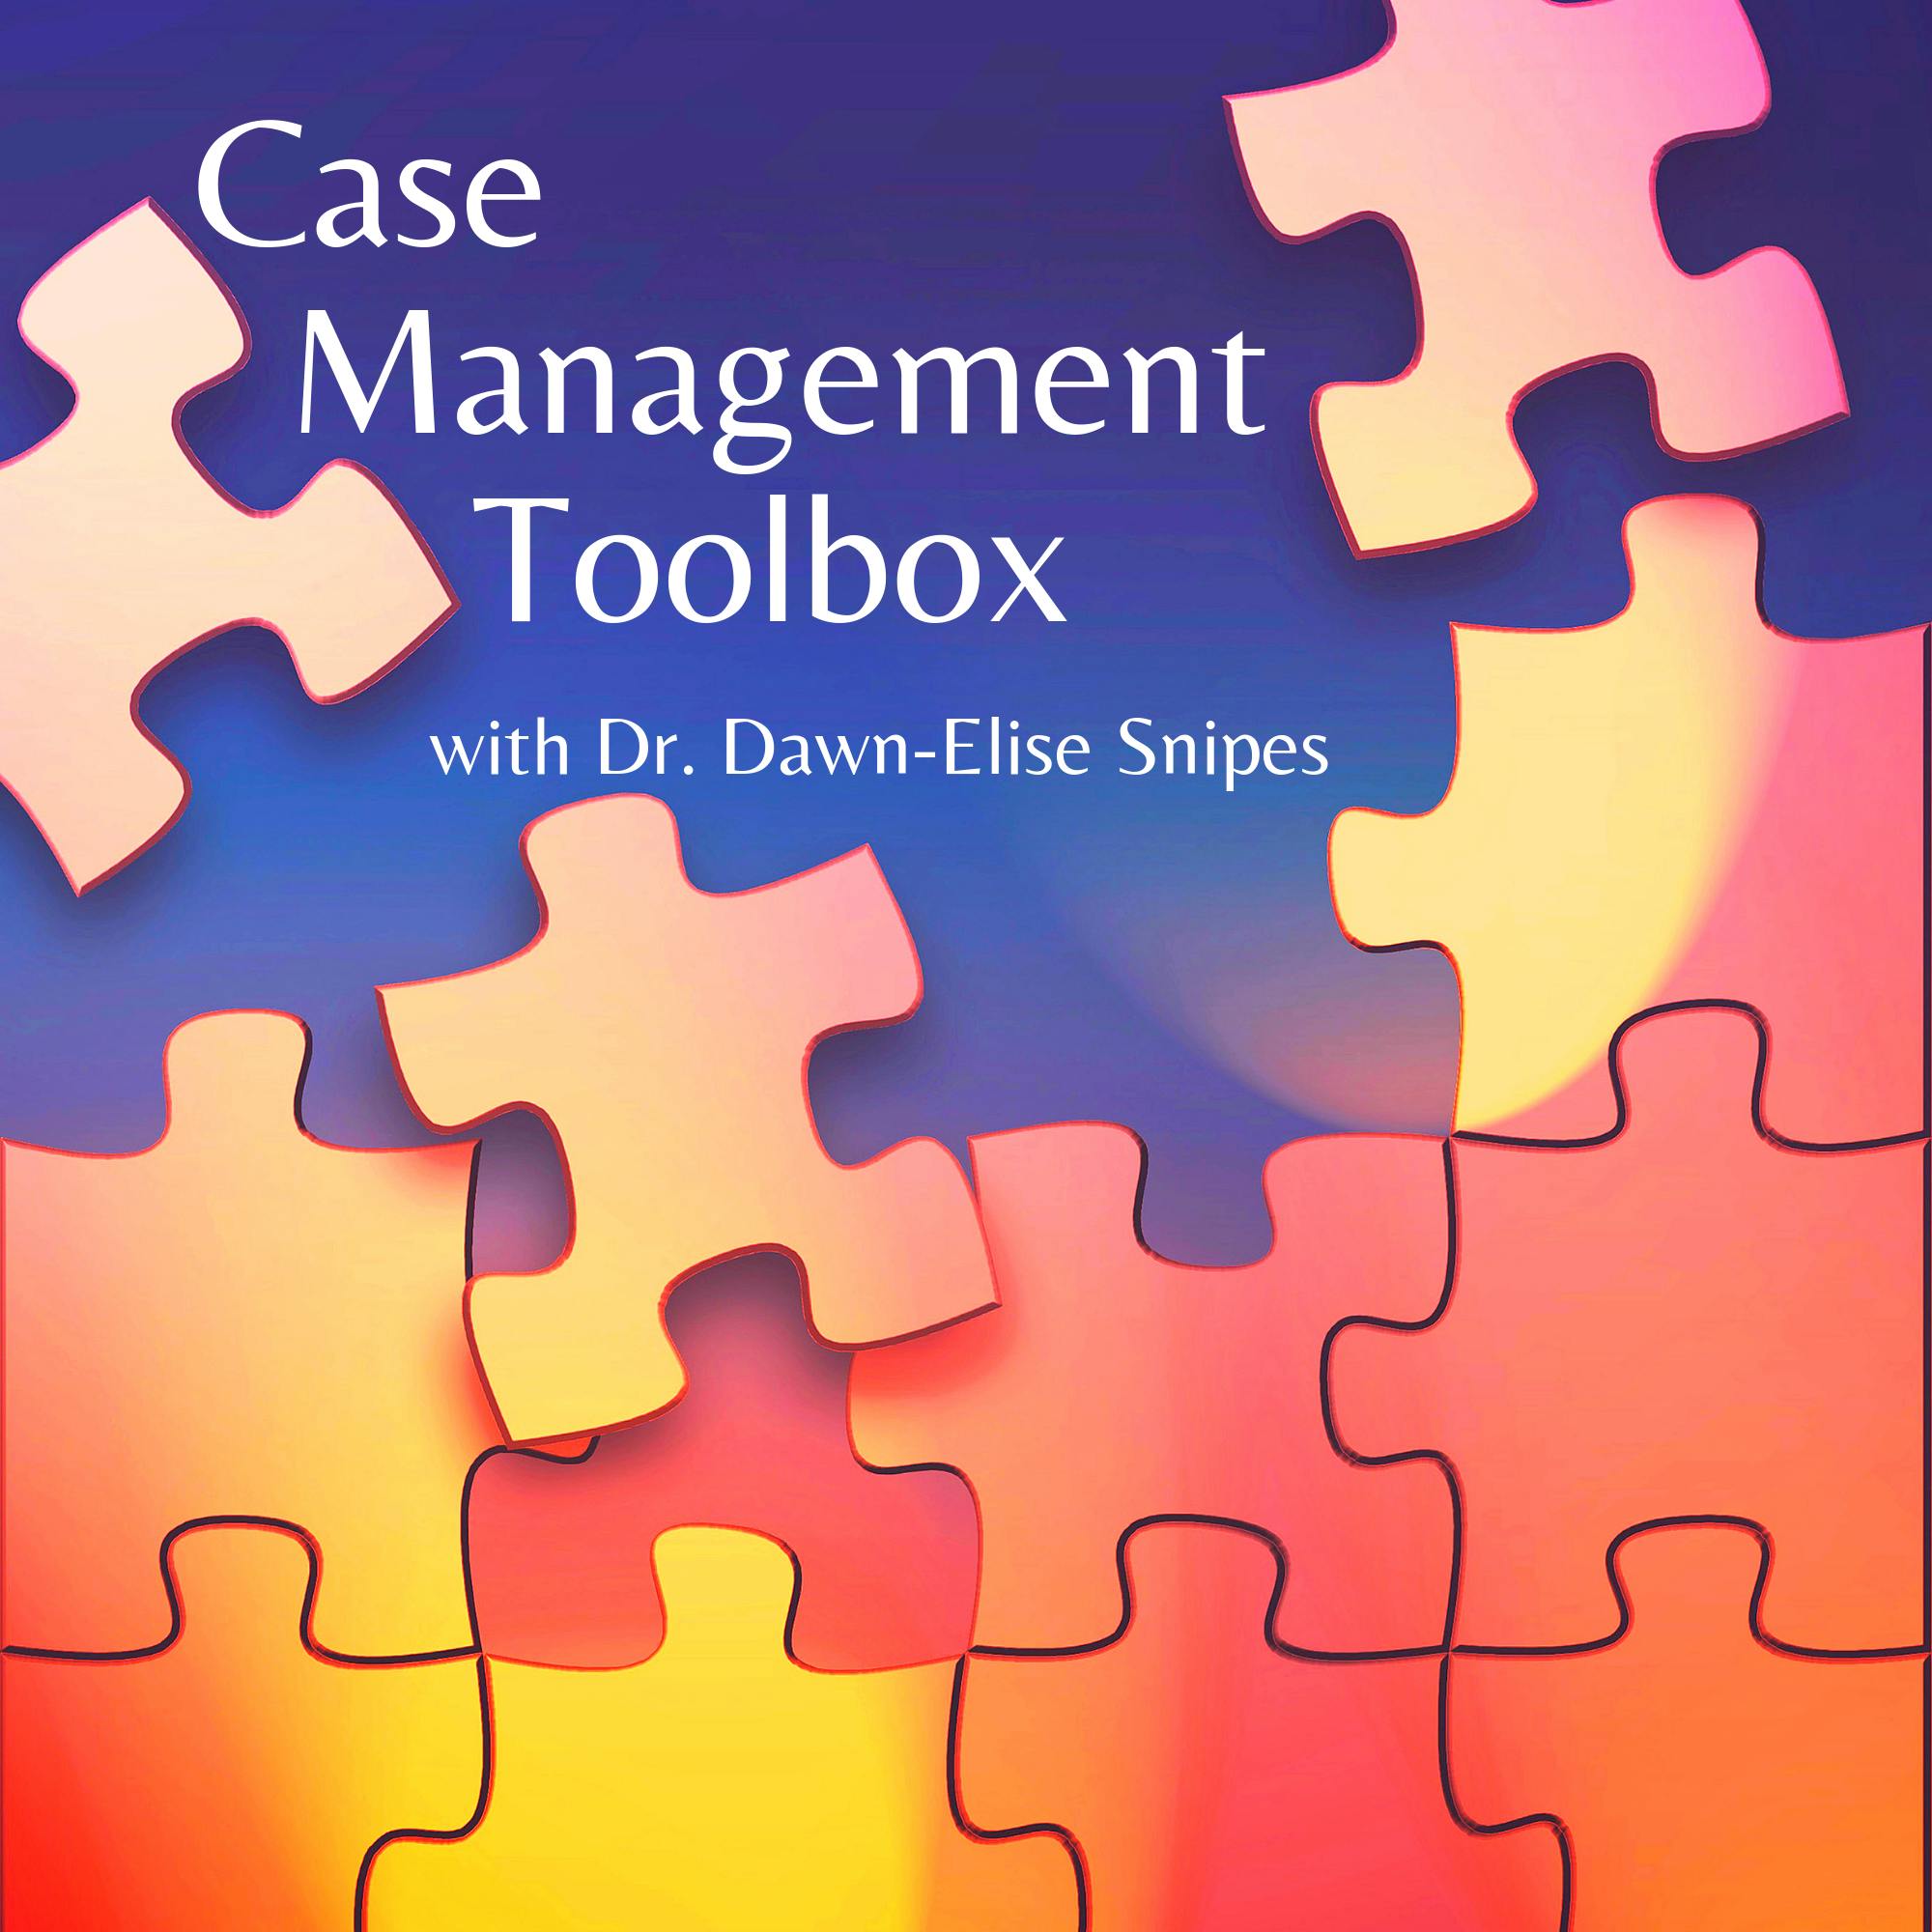 Principles of Case Management